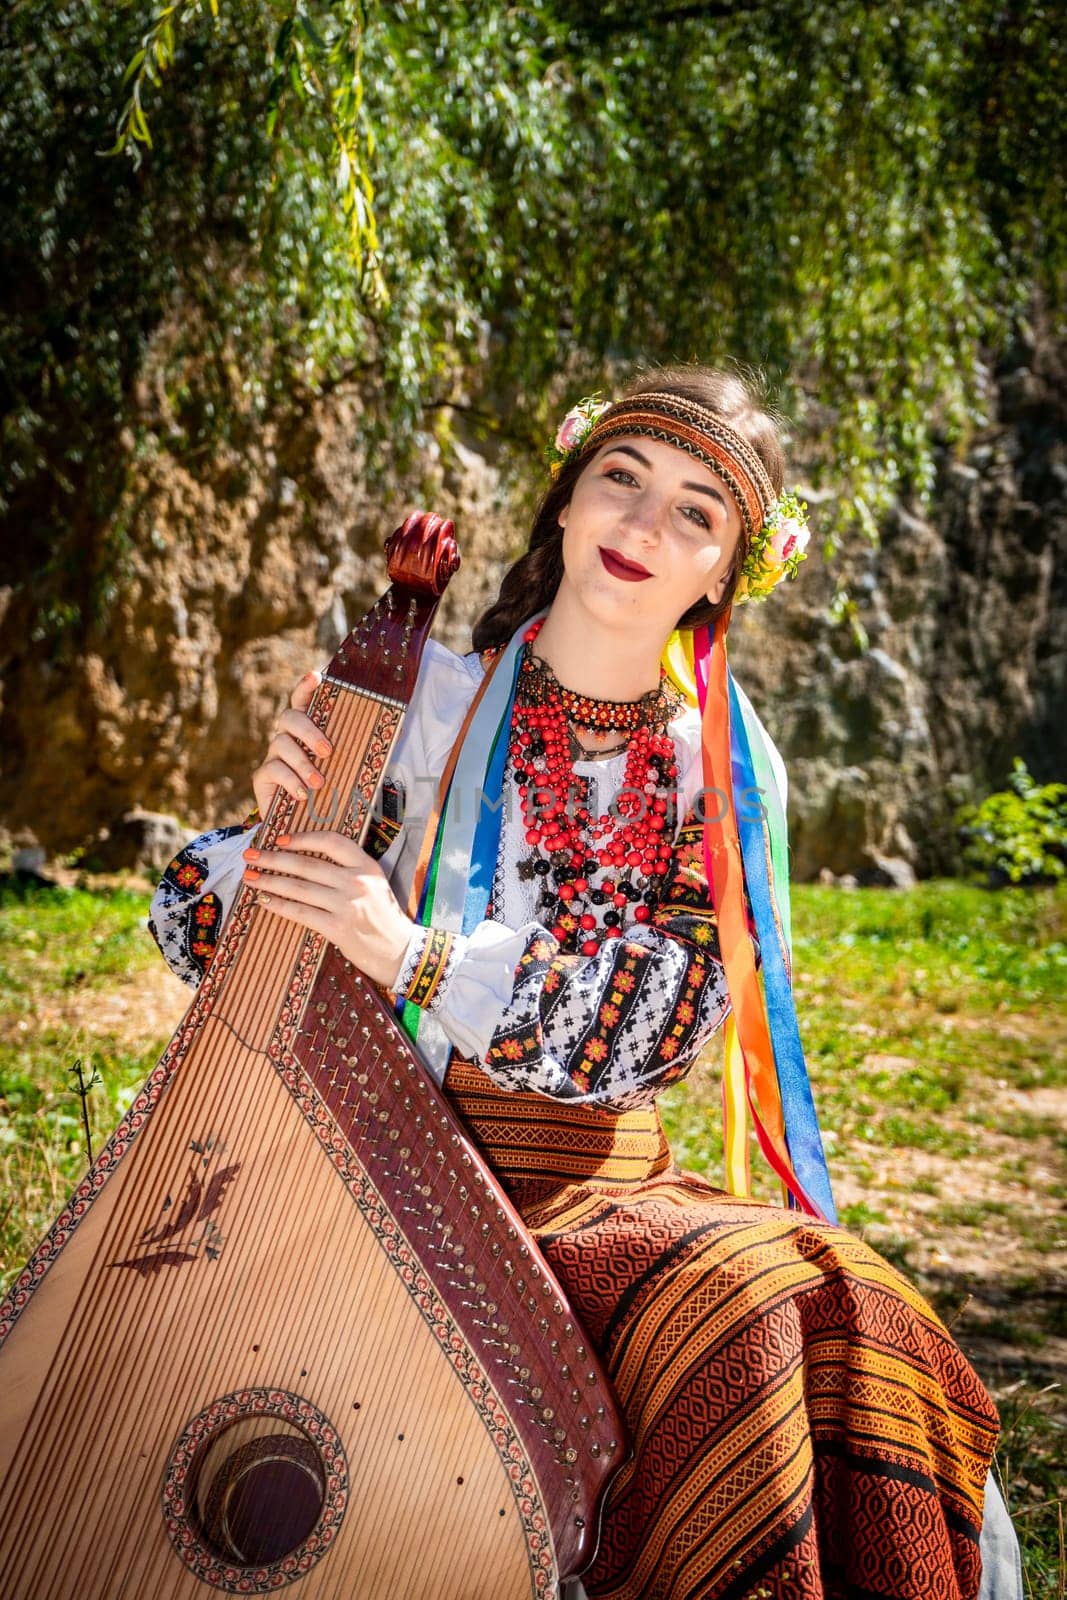 Ukrainian woman with a bandura musical instrument before performing folk music by Serhii_Voroshchuk